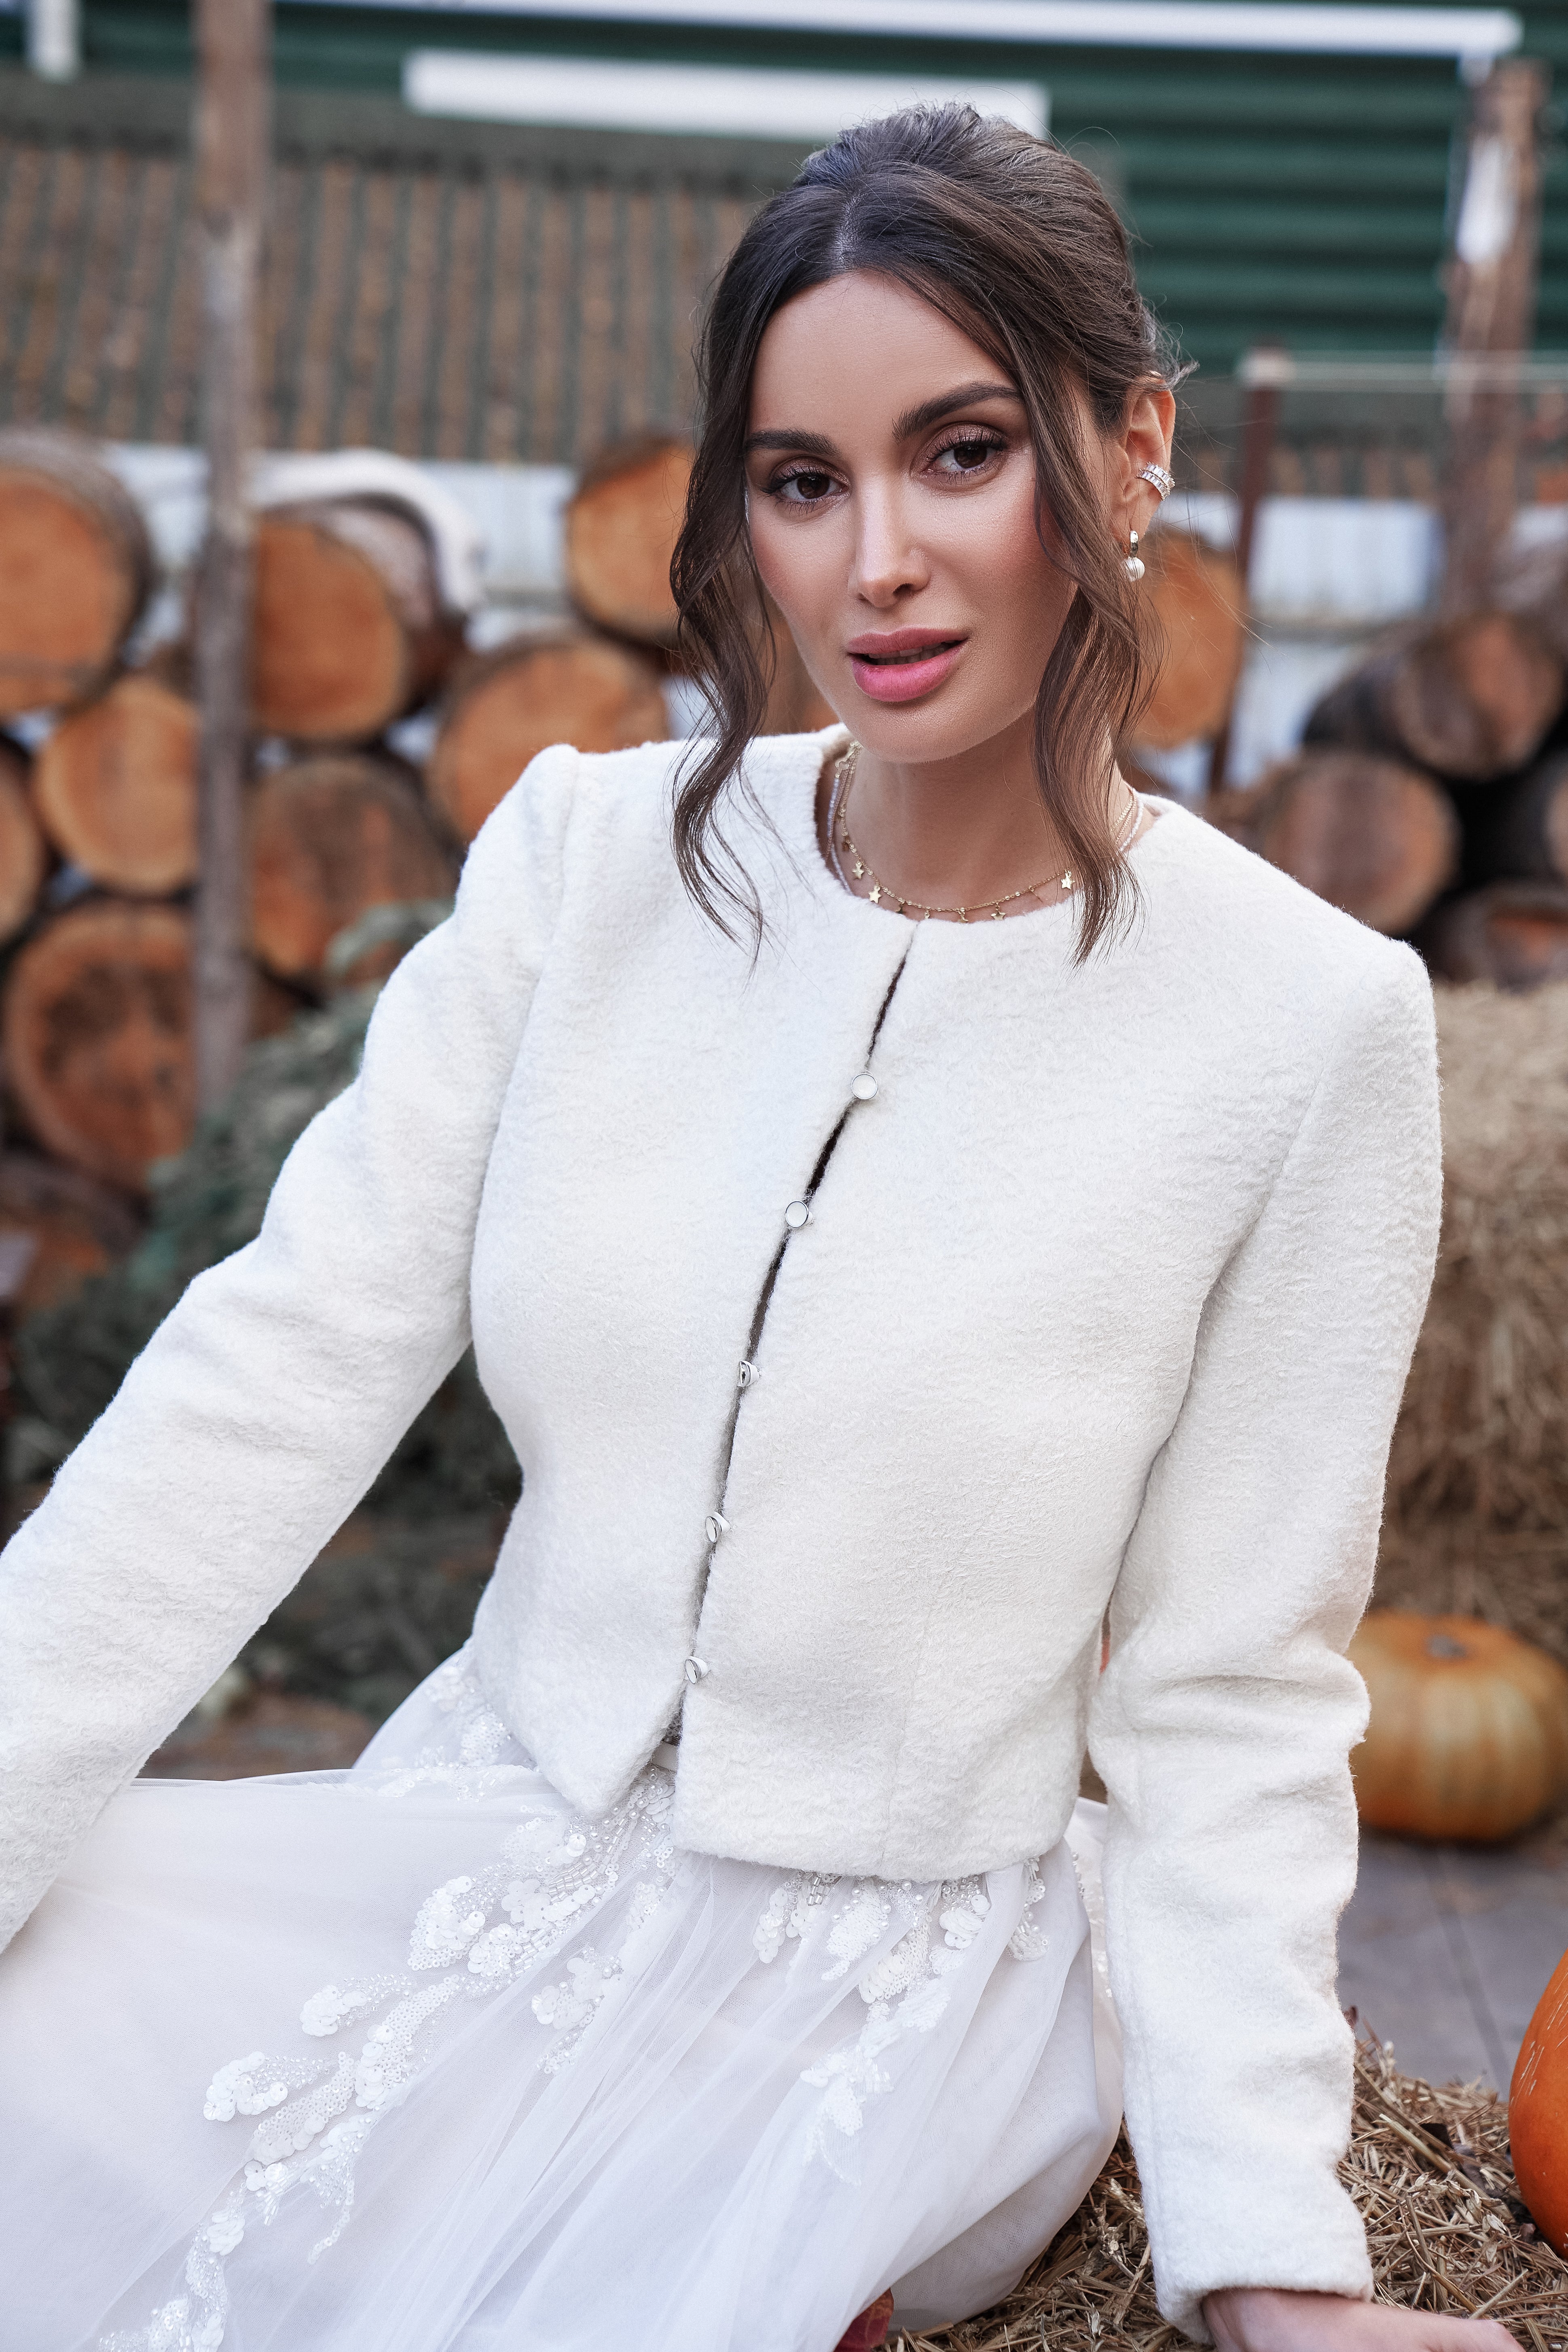 Warm alpaca wool jacket for wedding dress